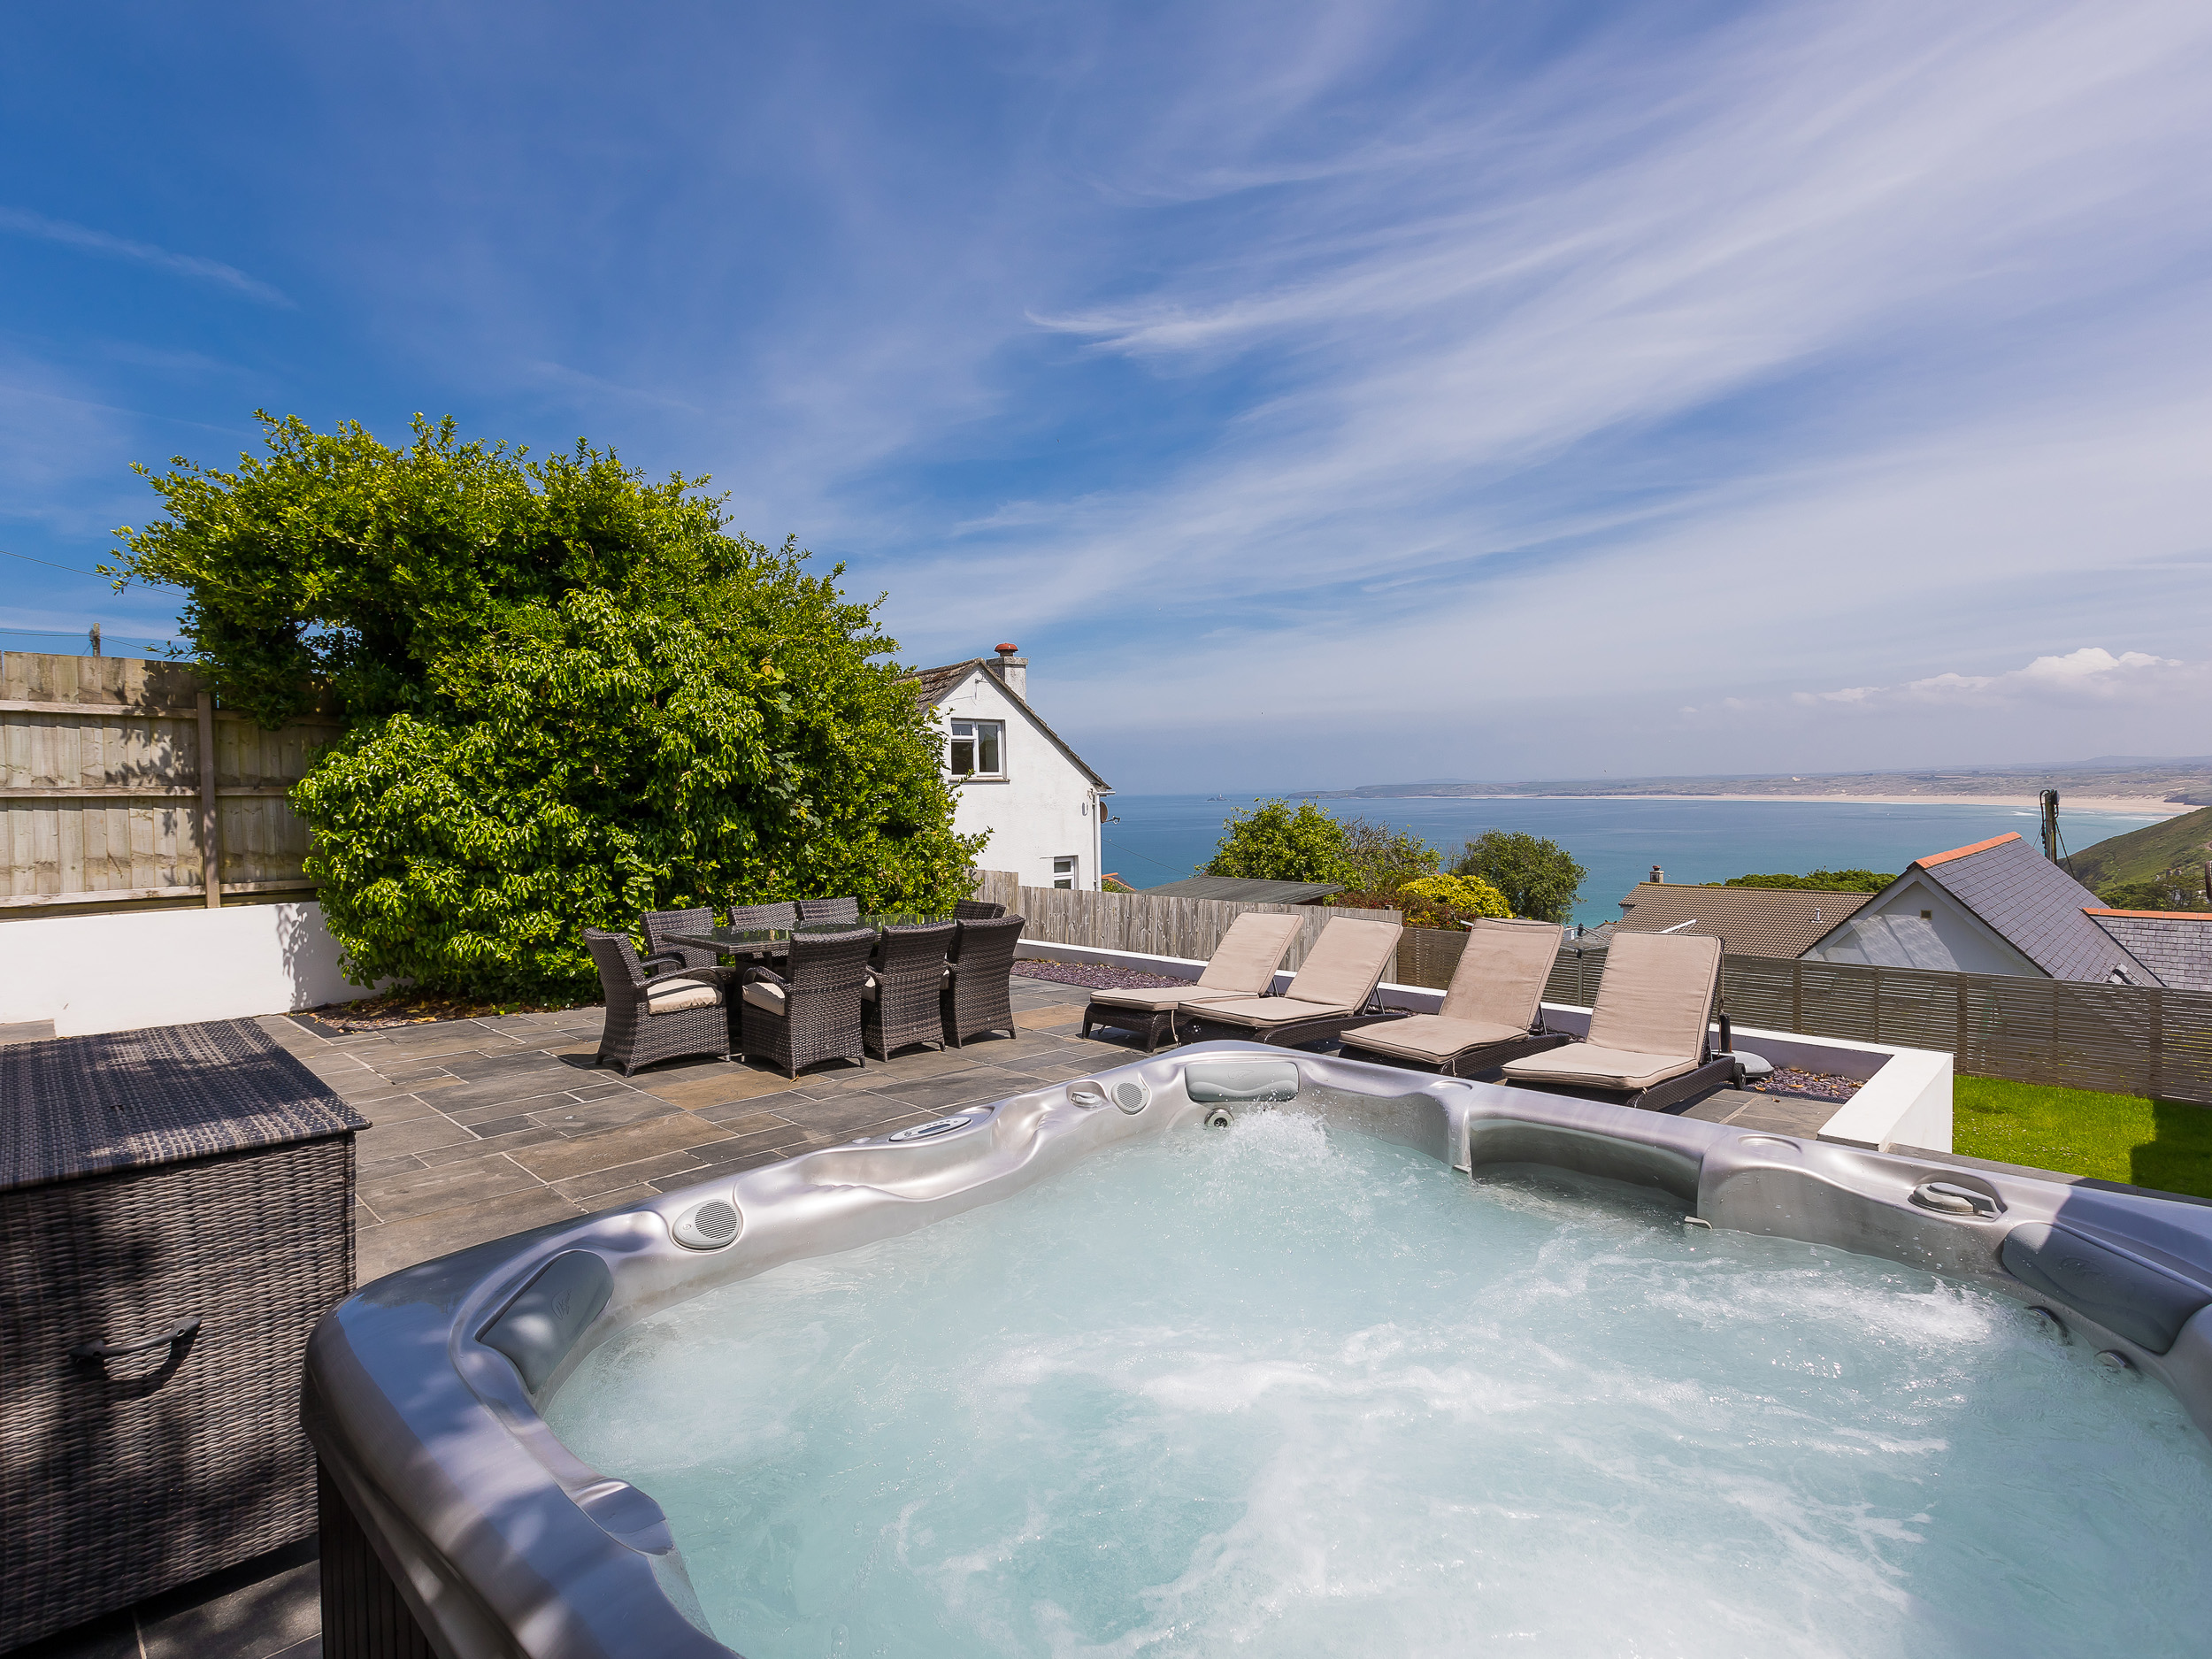 Hot tub overlooking seav views in Cornwall